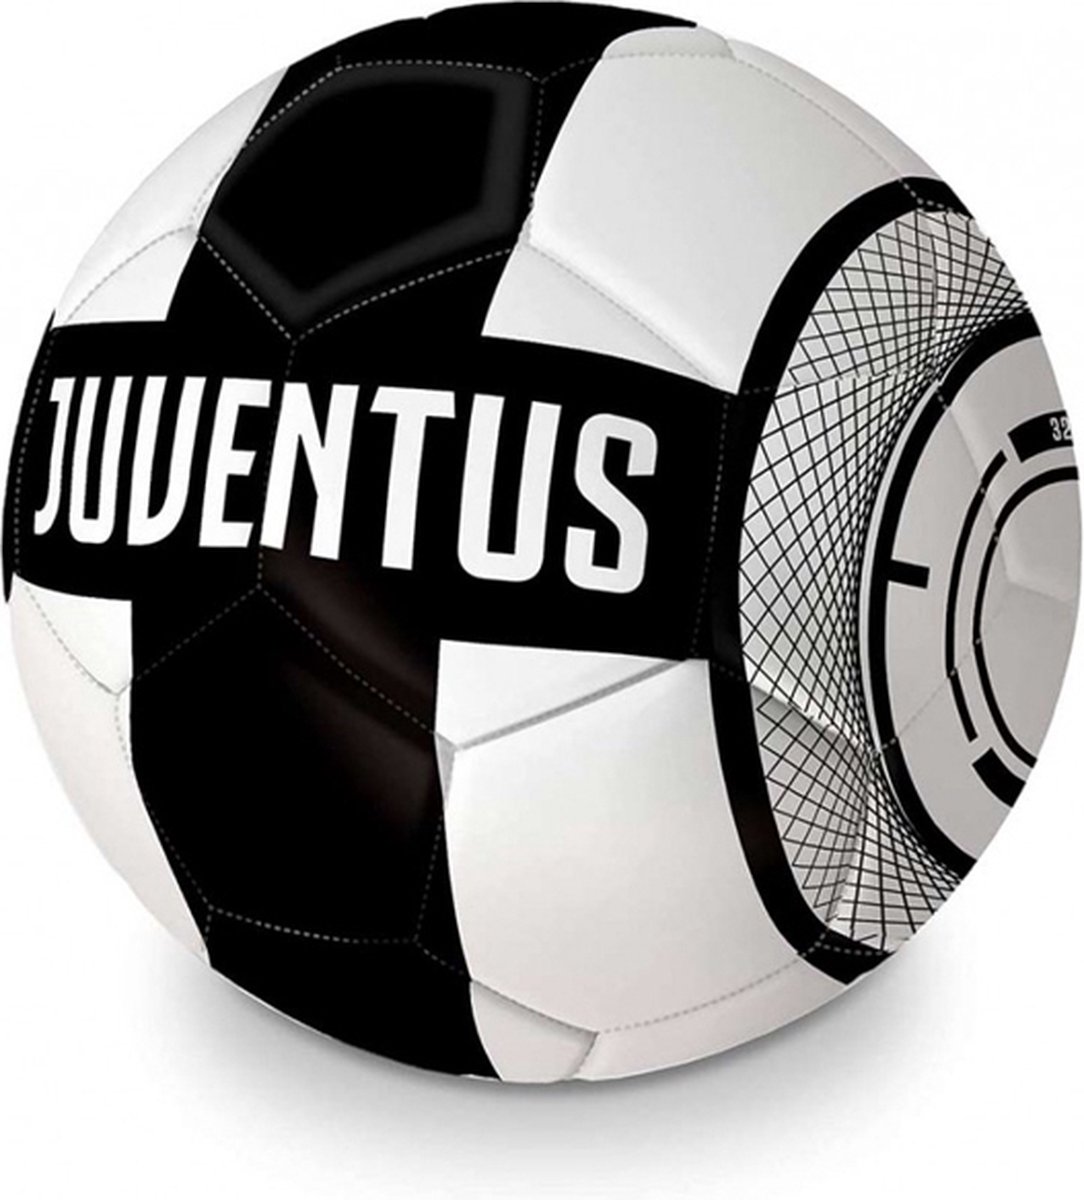 Juventus voetbal strepen - maat 5 - wit/zwart